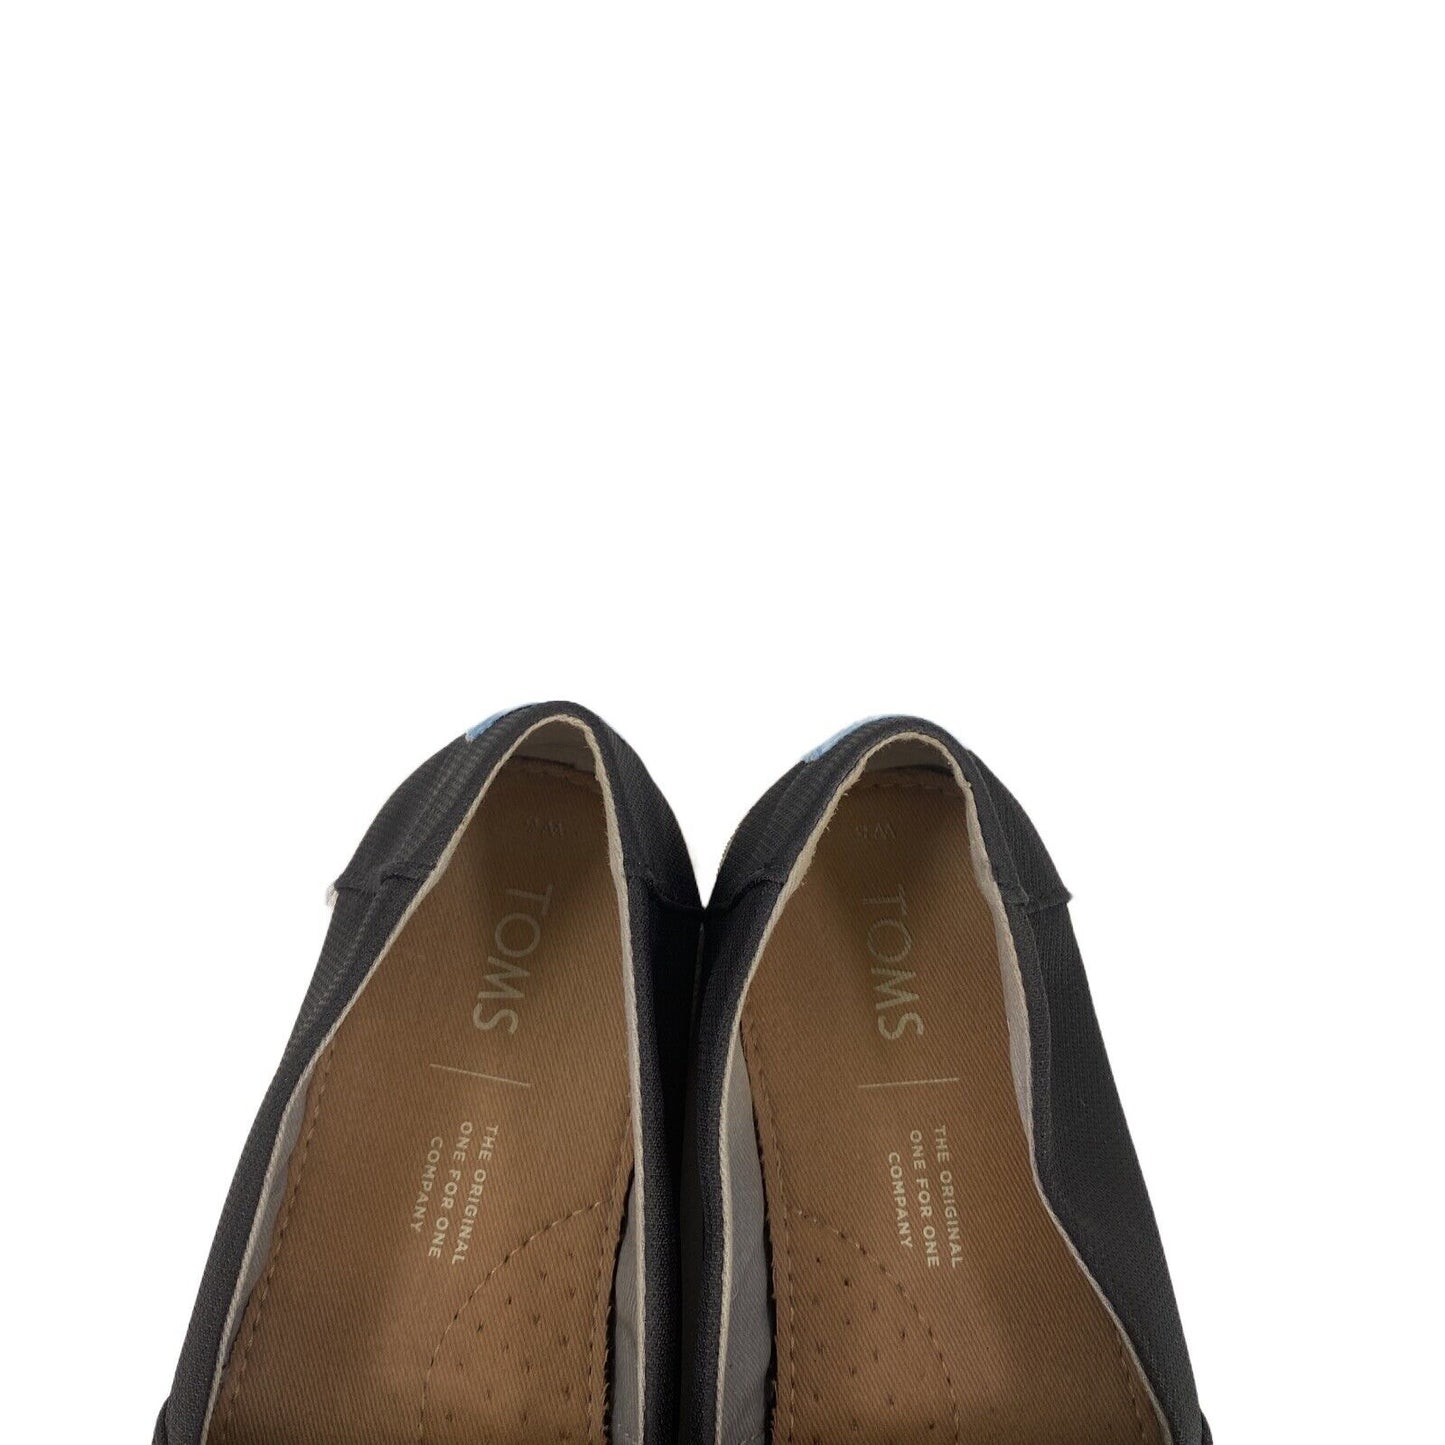 Toms Women's Black Avalon Loafer Flat - 6